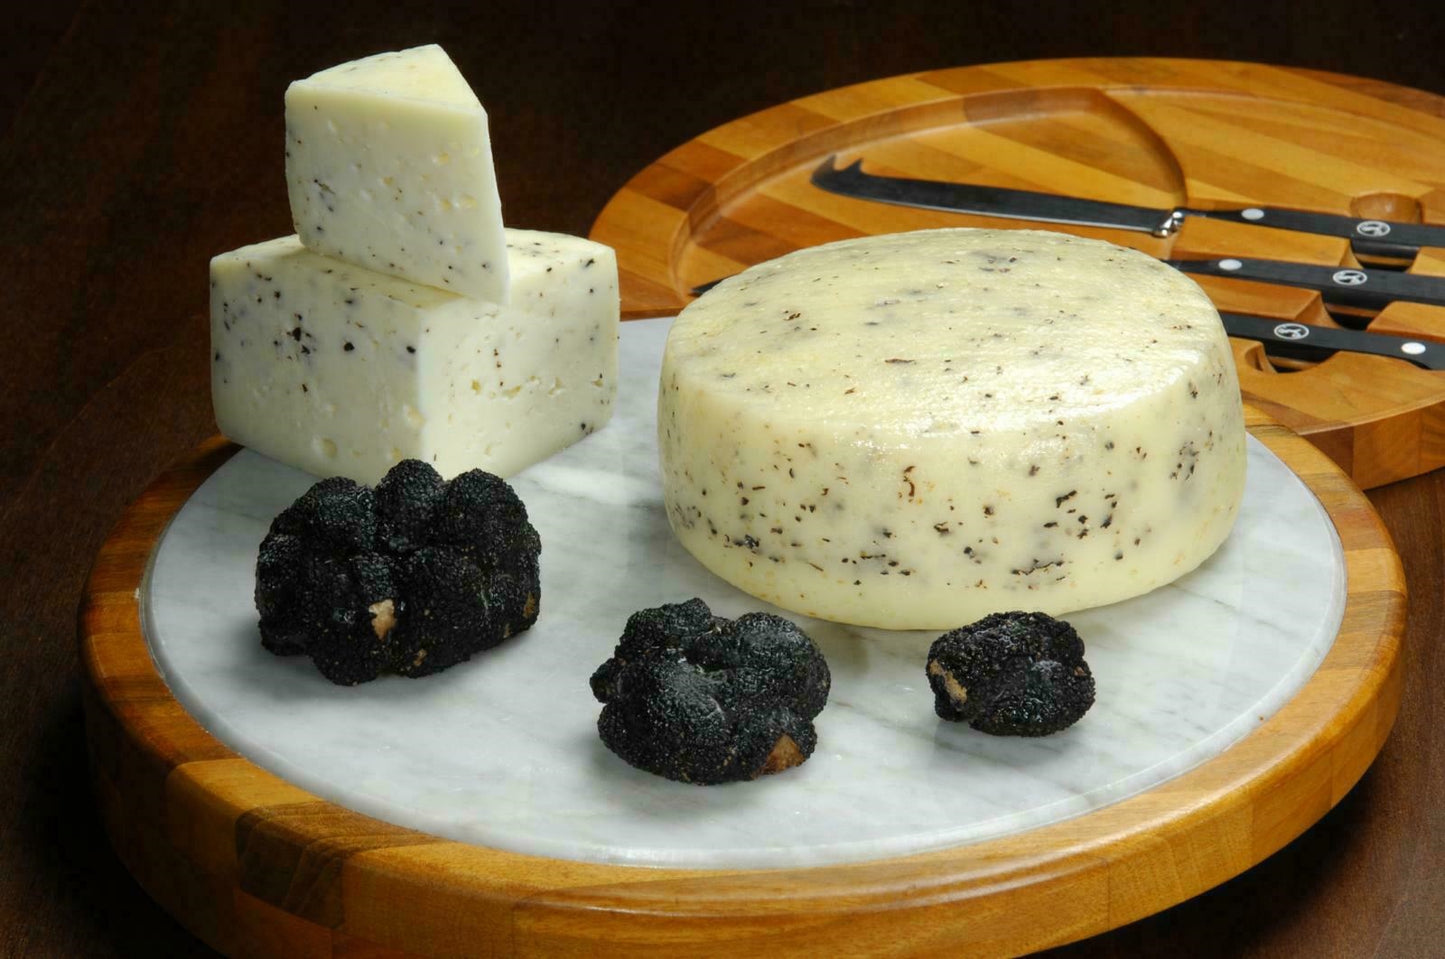 Caciotta al Tartufo formaggio semiduro 300 gr.